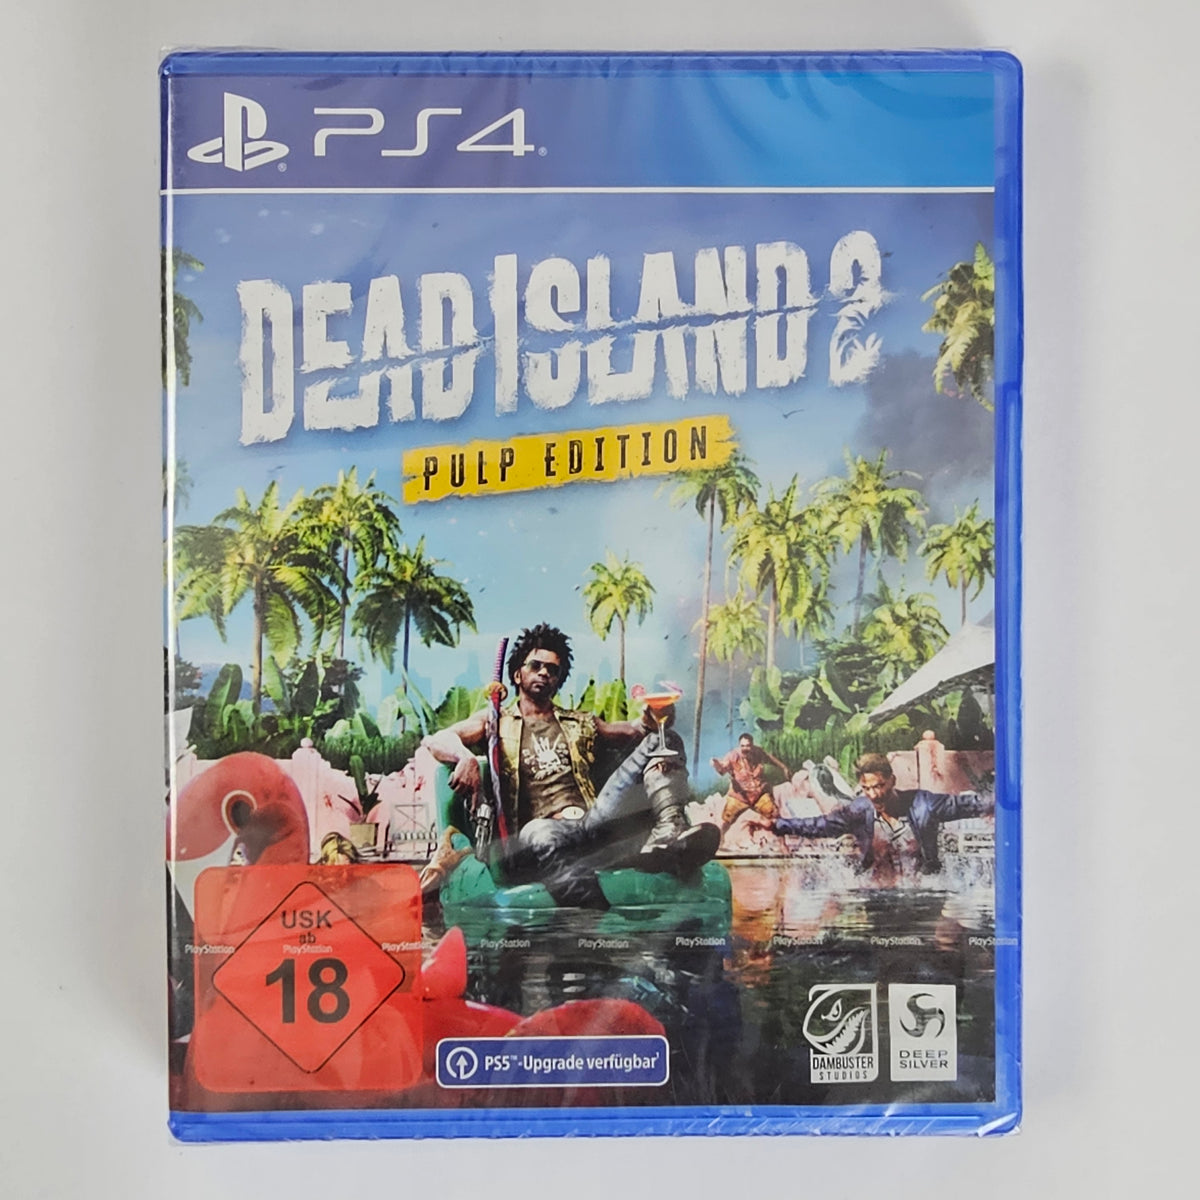 Dead Island 2 PULP Edition [PS4]